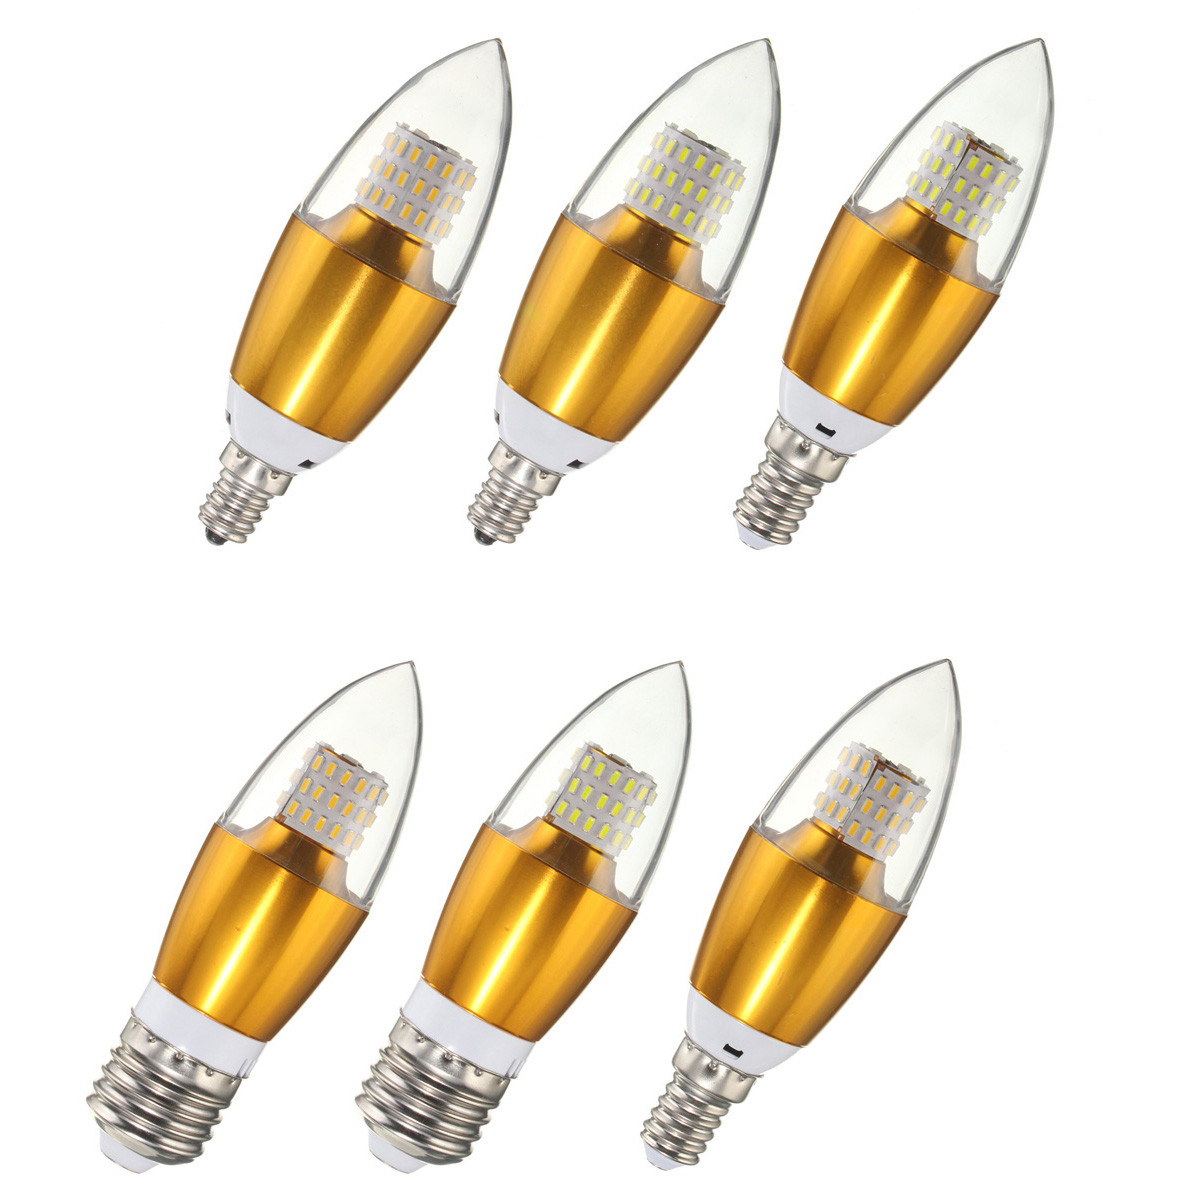 Dimmable-E27-E14-E12-7W-60-SMD-3014-LED-Pure-White-Warm-White-Candle-Light-Lamp-Bulb-AC110V-1082667-4